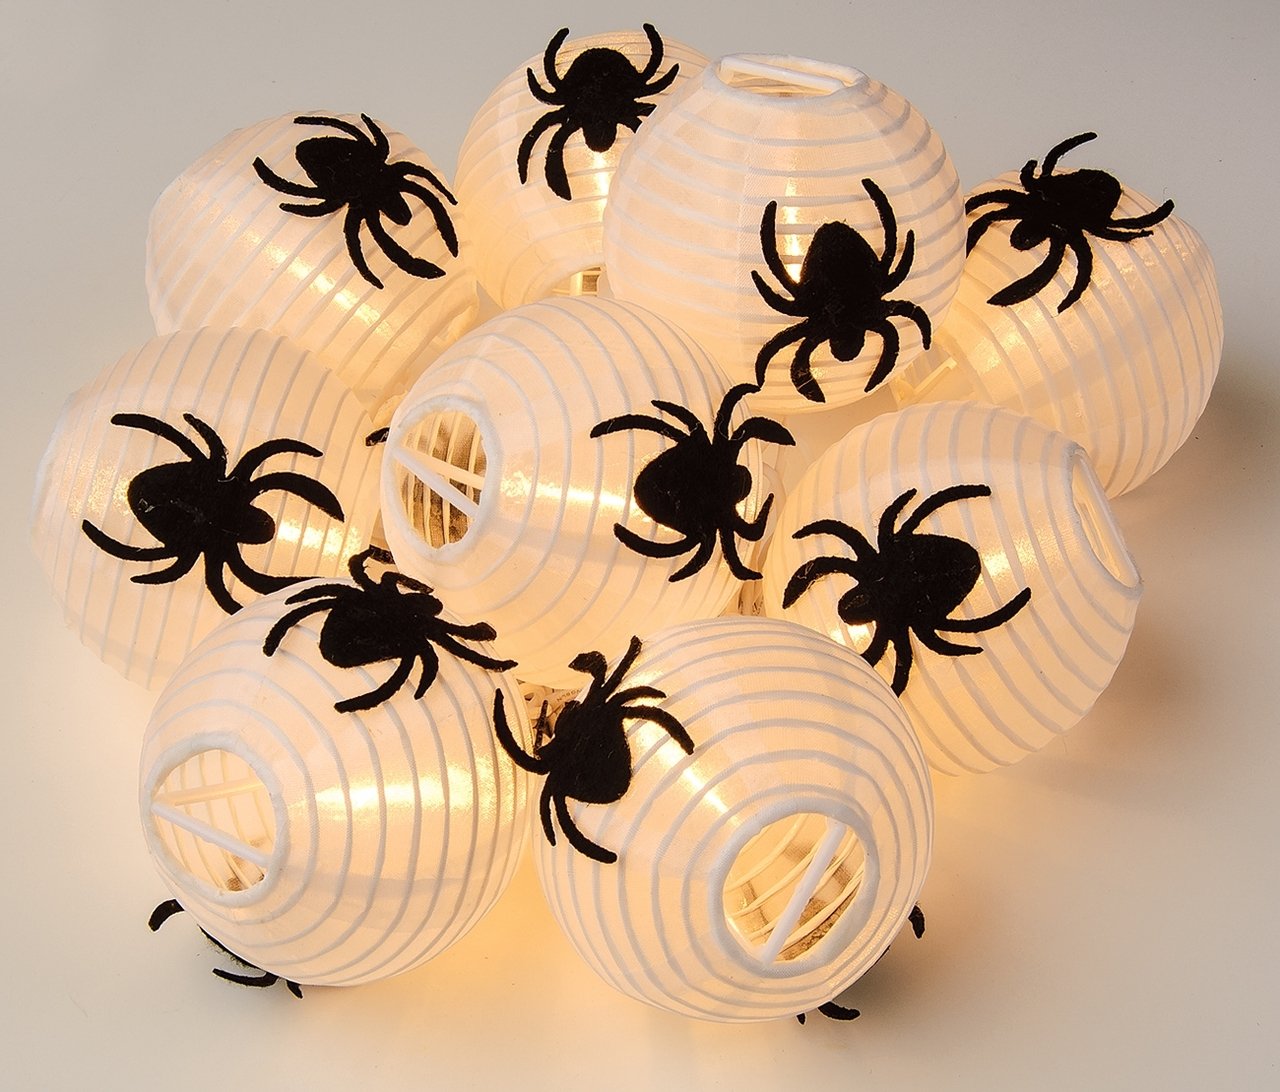 Nylon Spooky Spiders Lantern String Lights - PaperLanternStore.com - Paper Lanterns, Decor, Party Lights & More